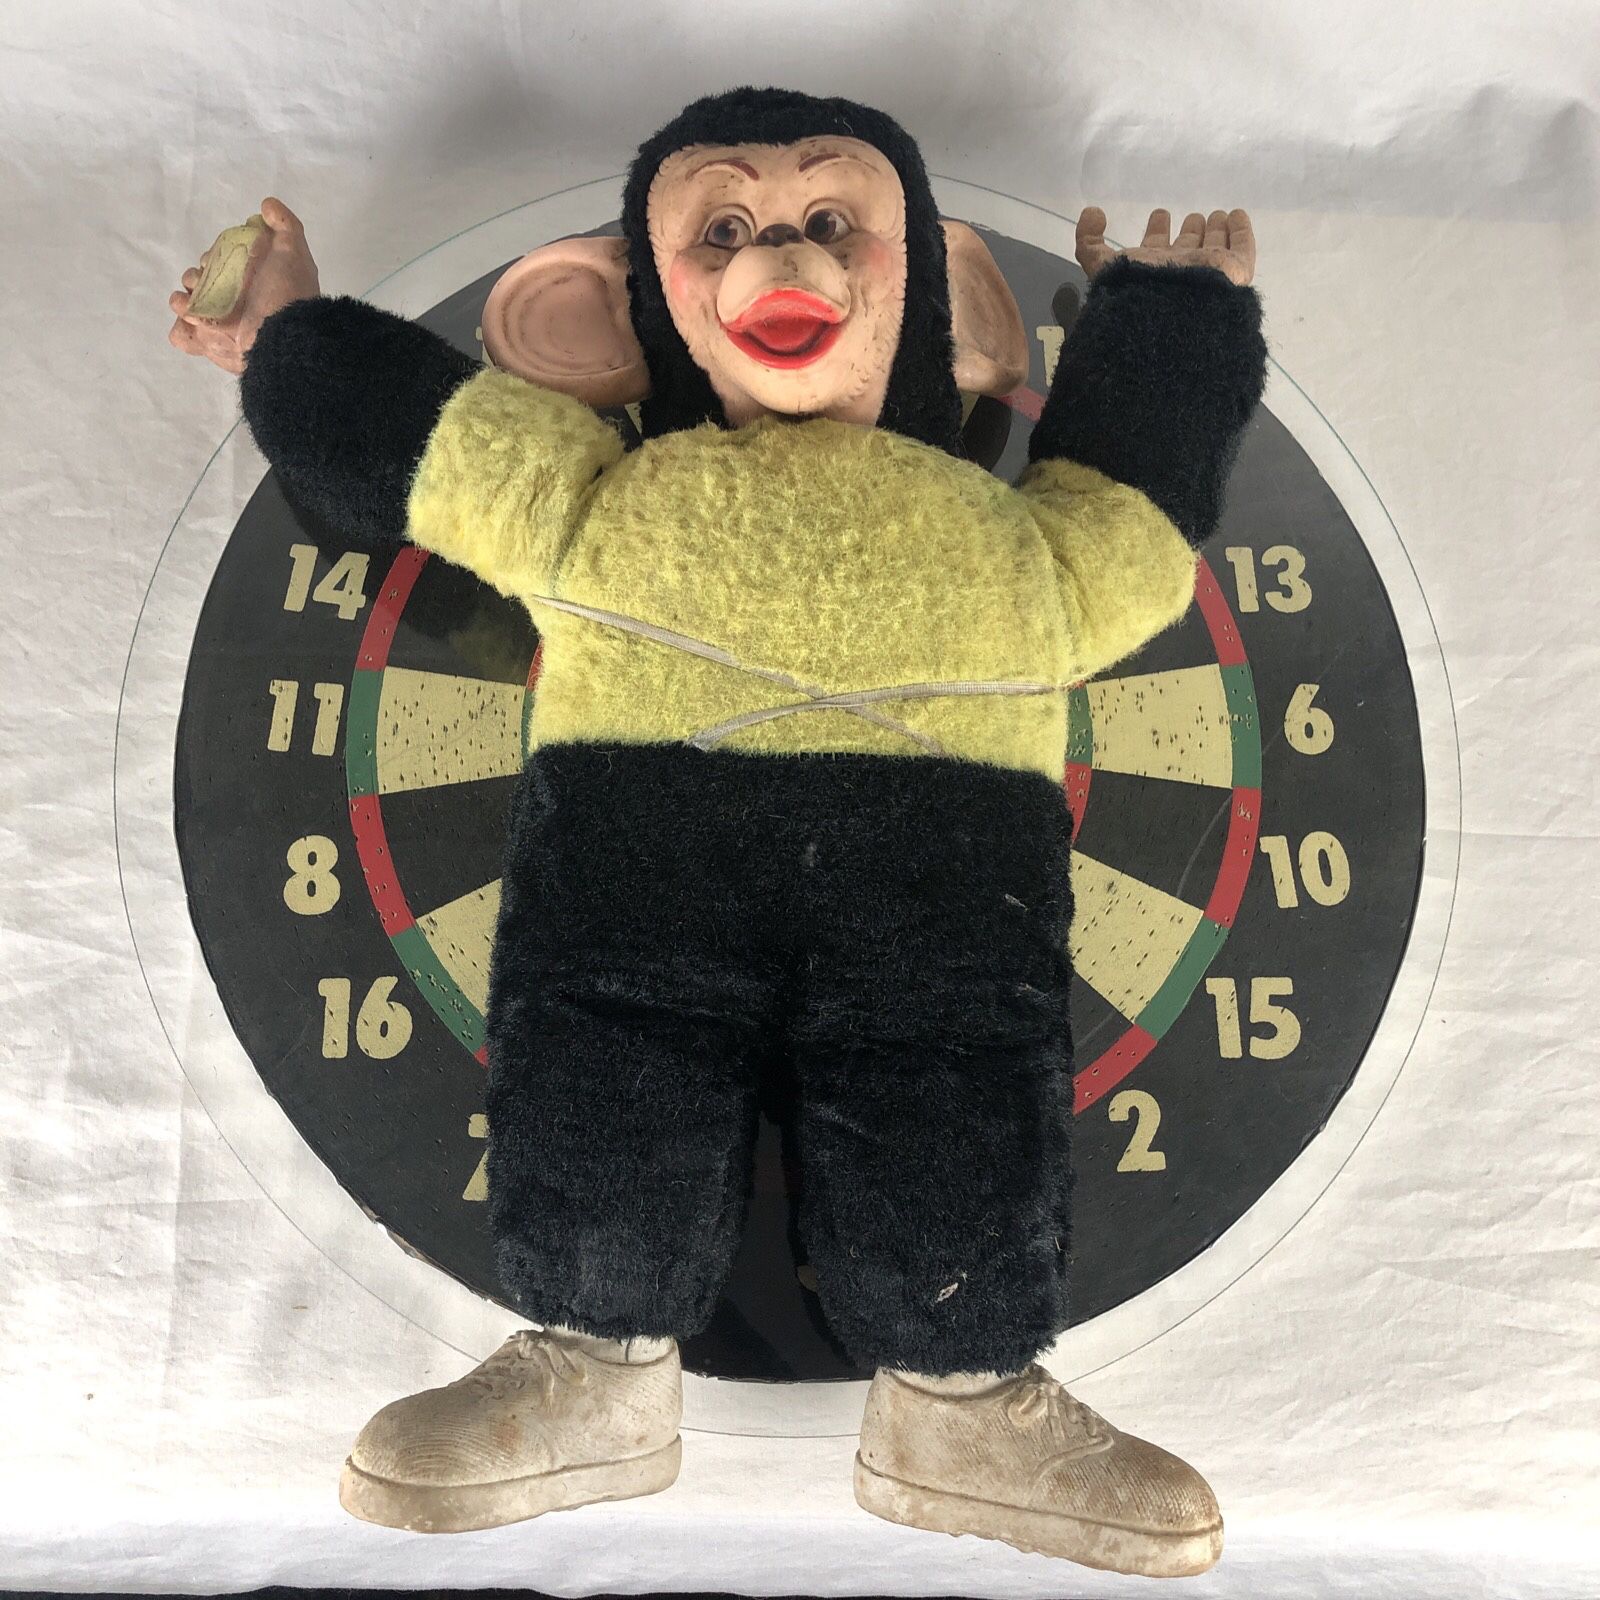 MR. BIM ZIP ZIPPY Rubber Face Plush Toy Monkey w/Banana Howdy Doody Show 1960s